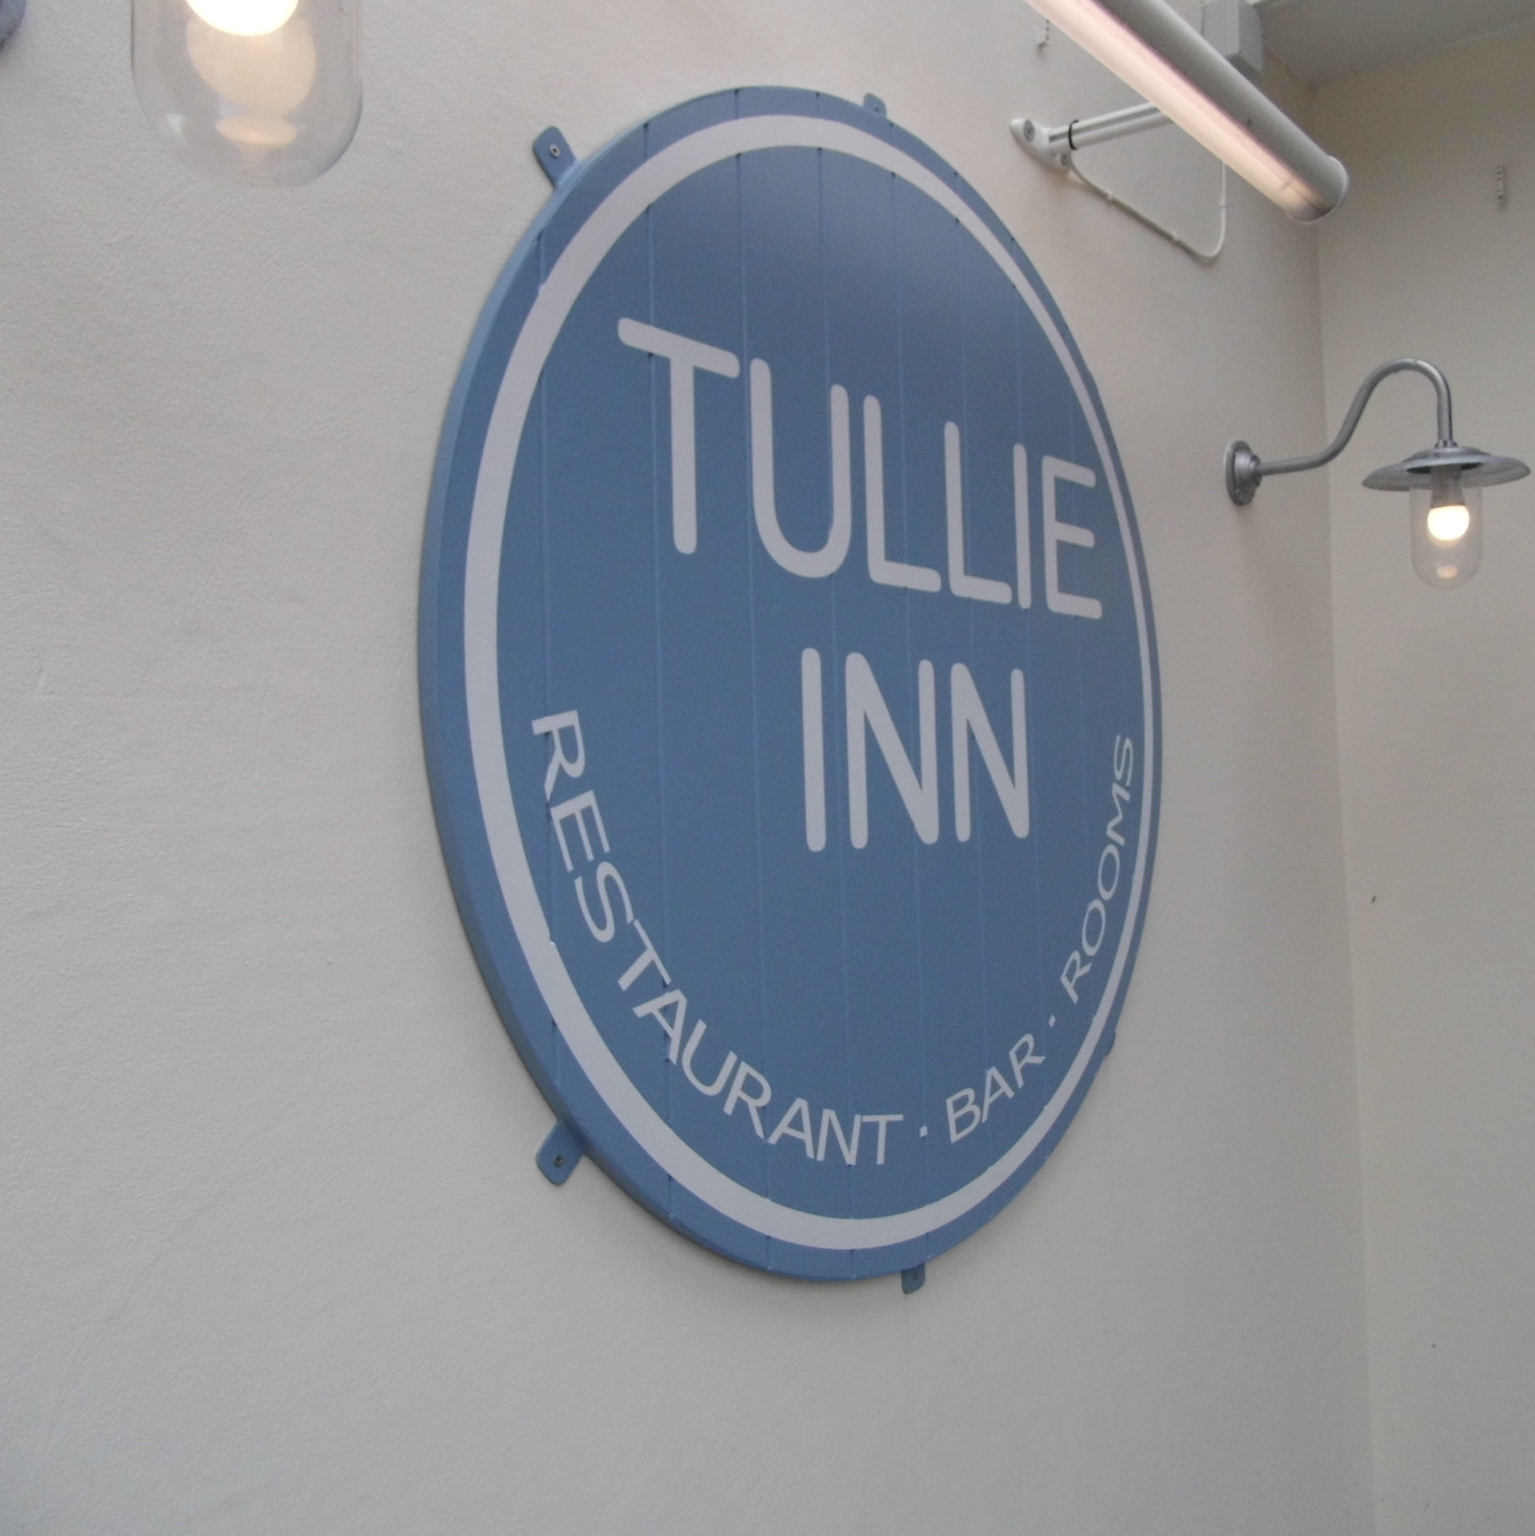 Tuillie Inn Balloch